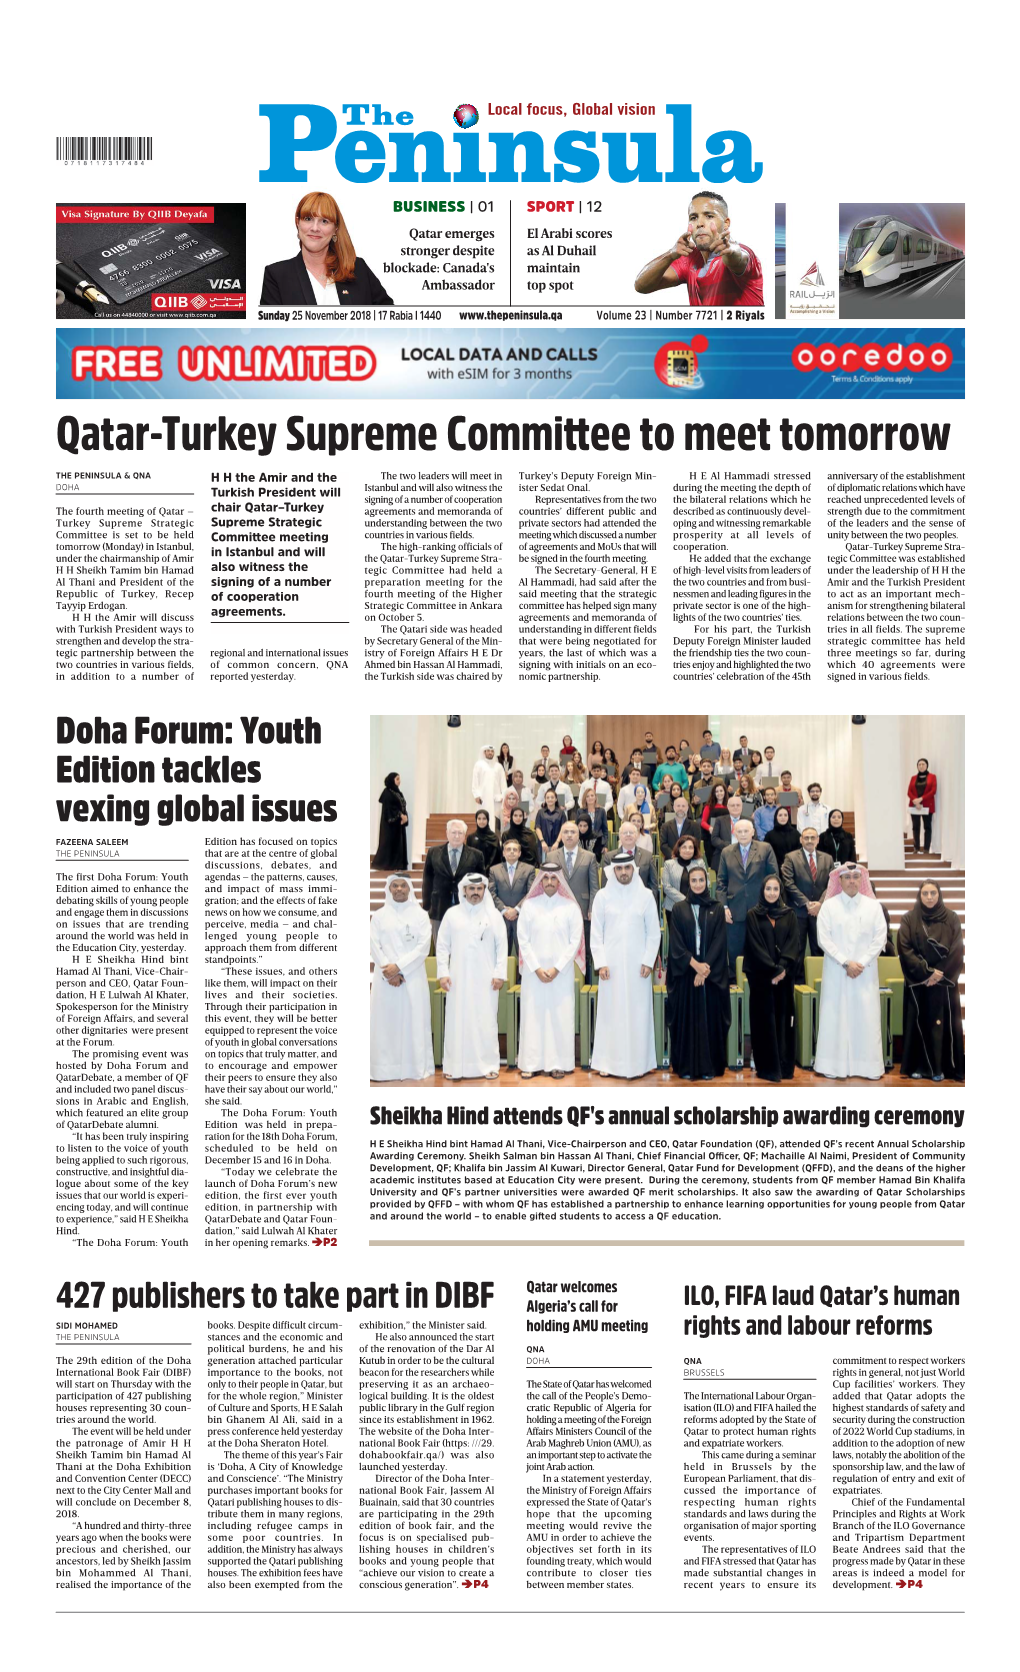 Qatar-Turkey Supreme Committee to Meet Tomorrow